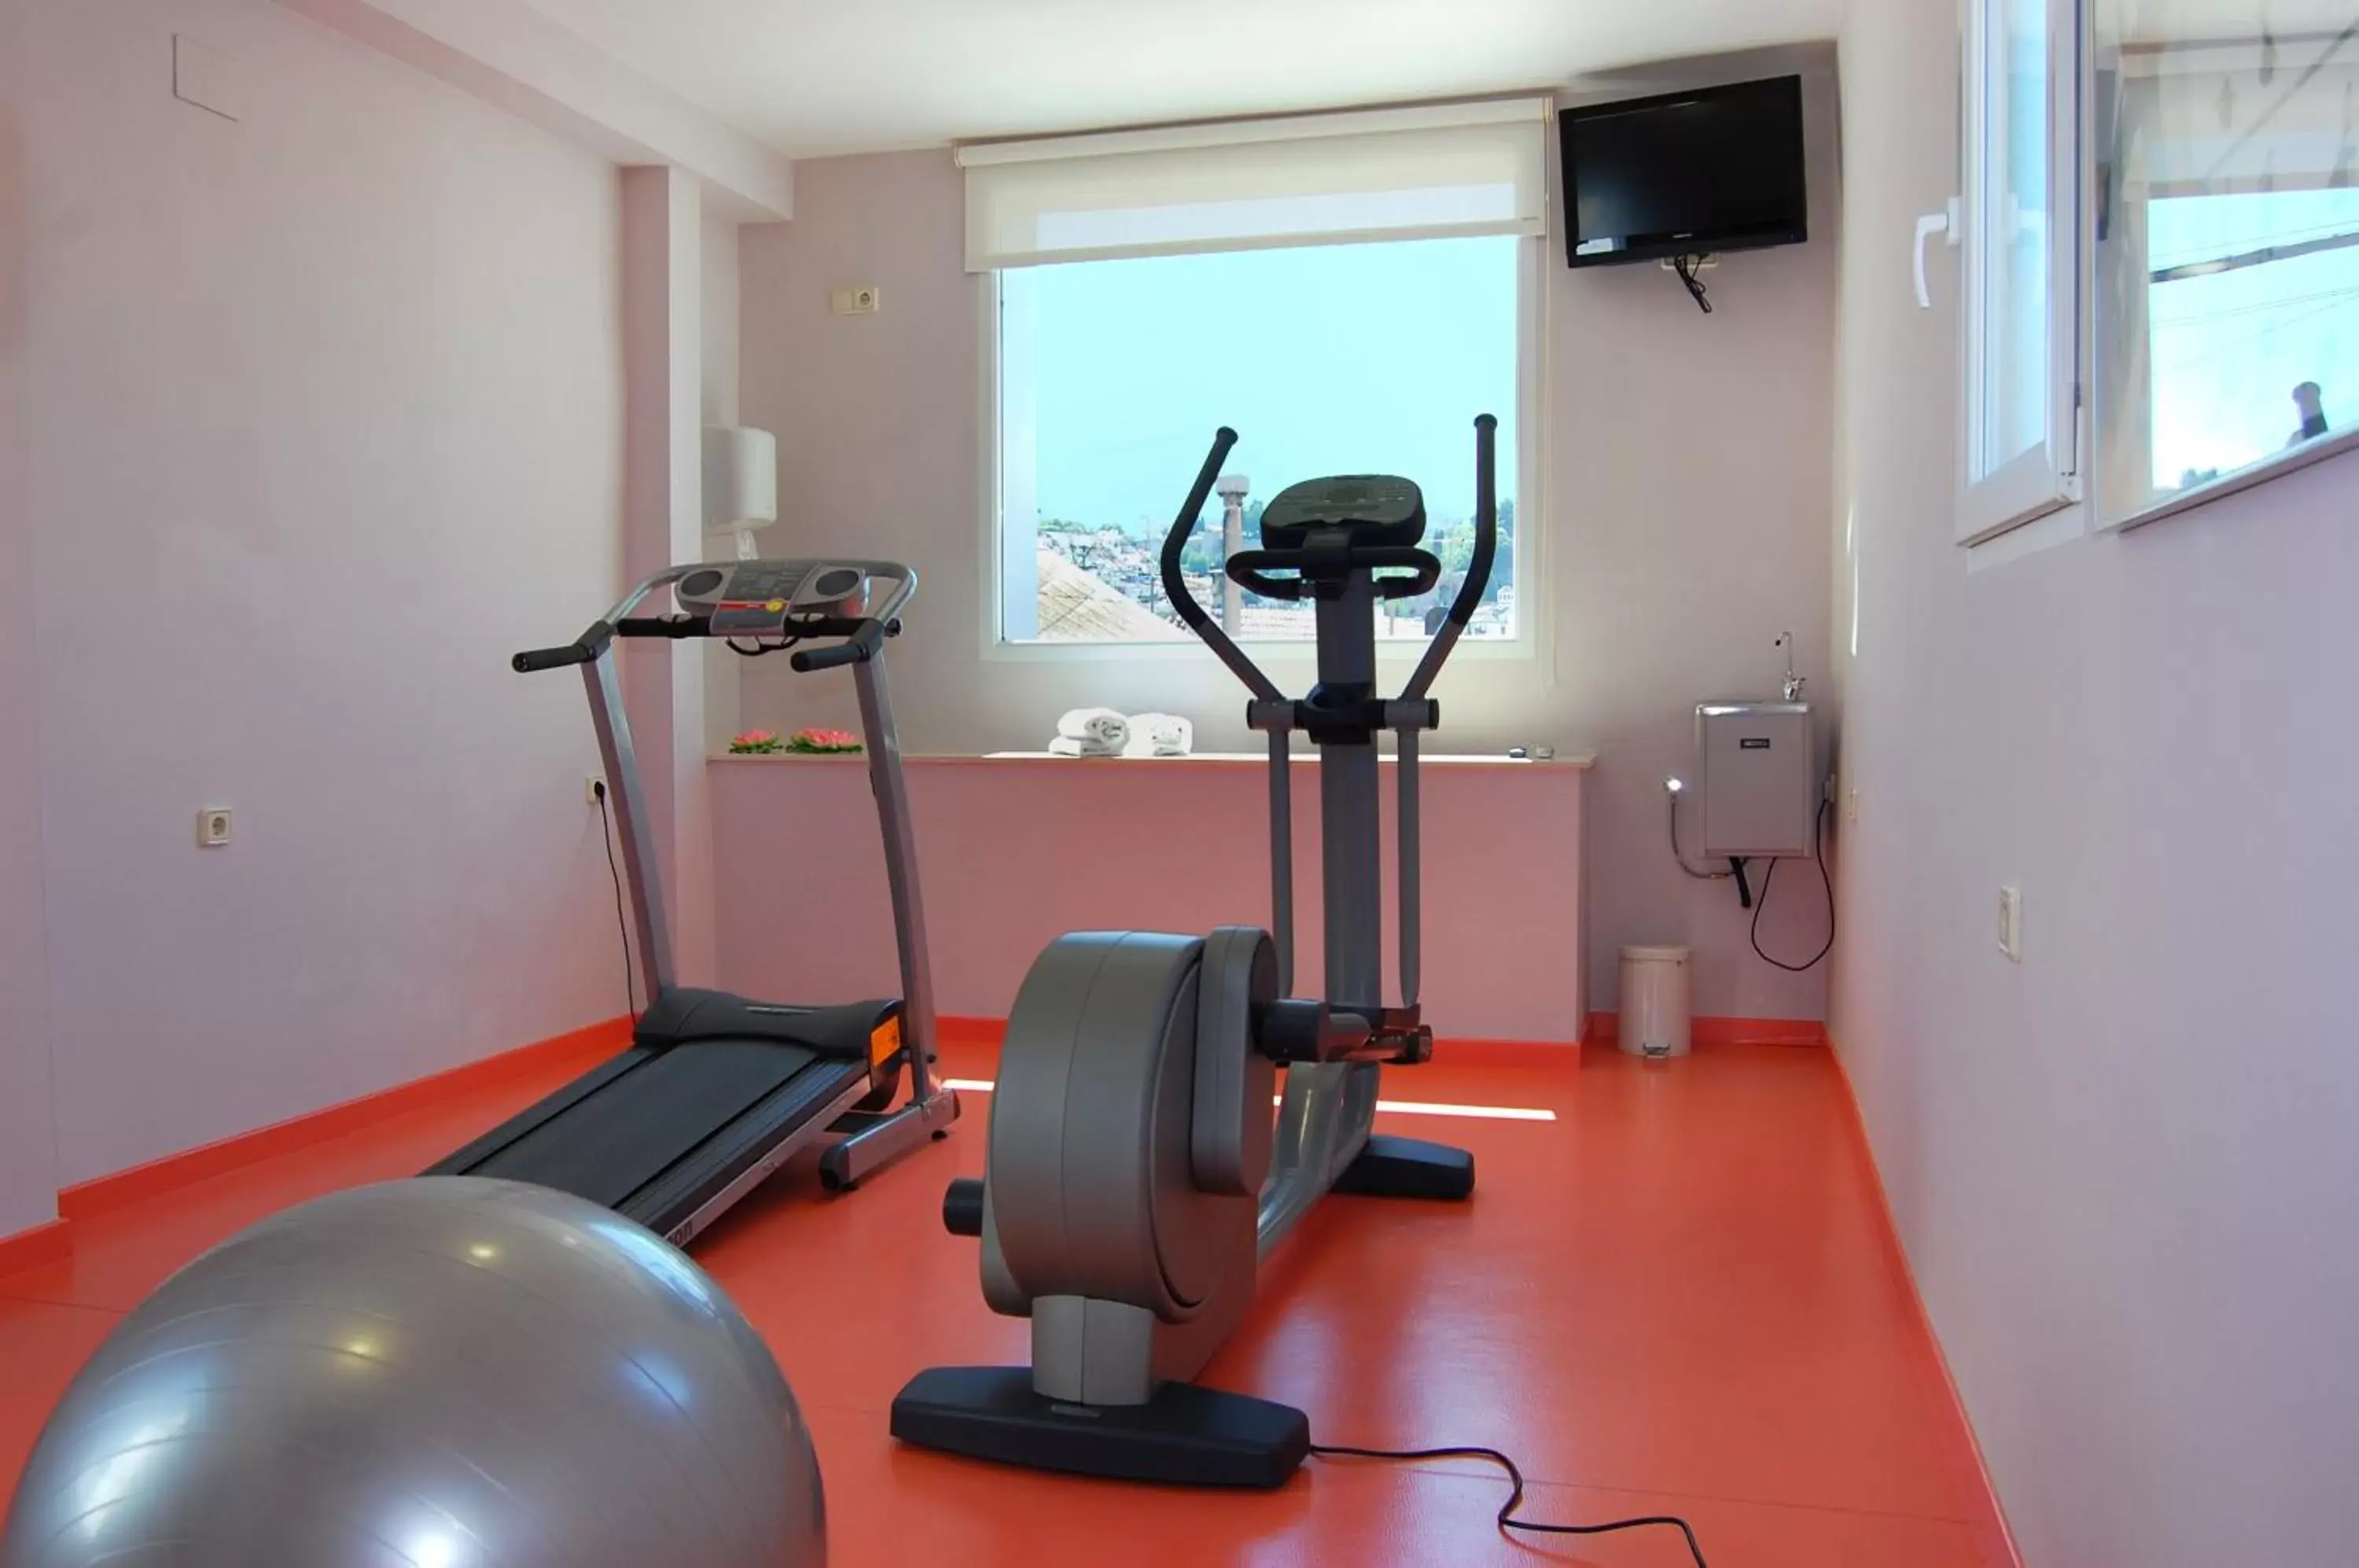 Fitness centre/facilities, Fitness Center/Facilities in Hotel Macià Cóndor